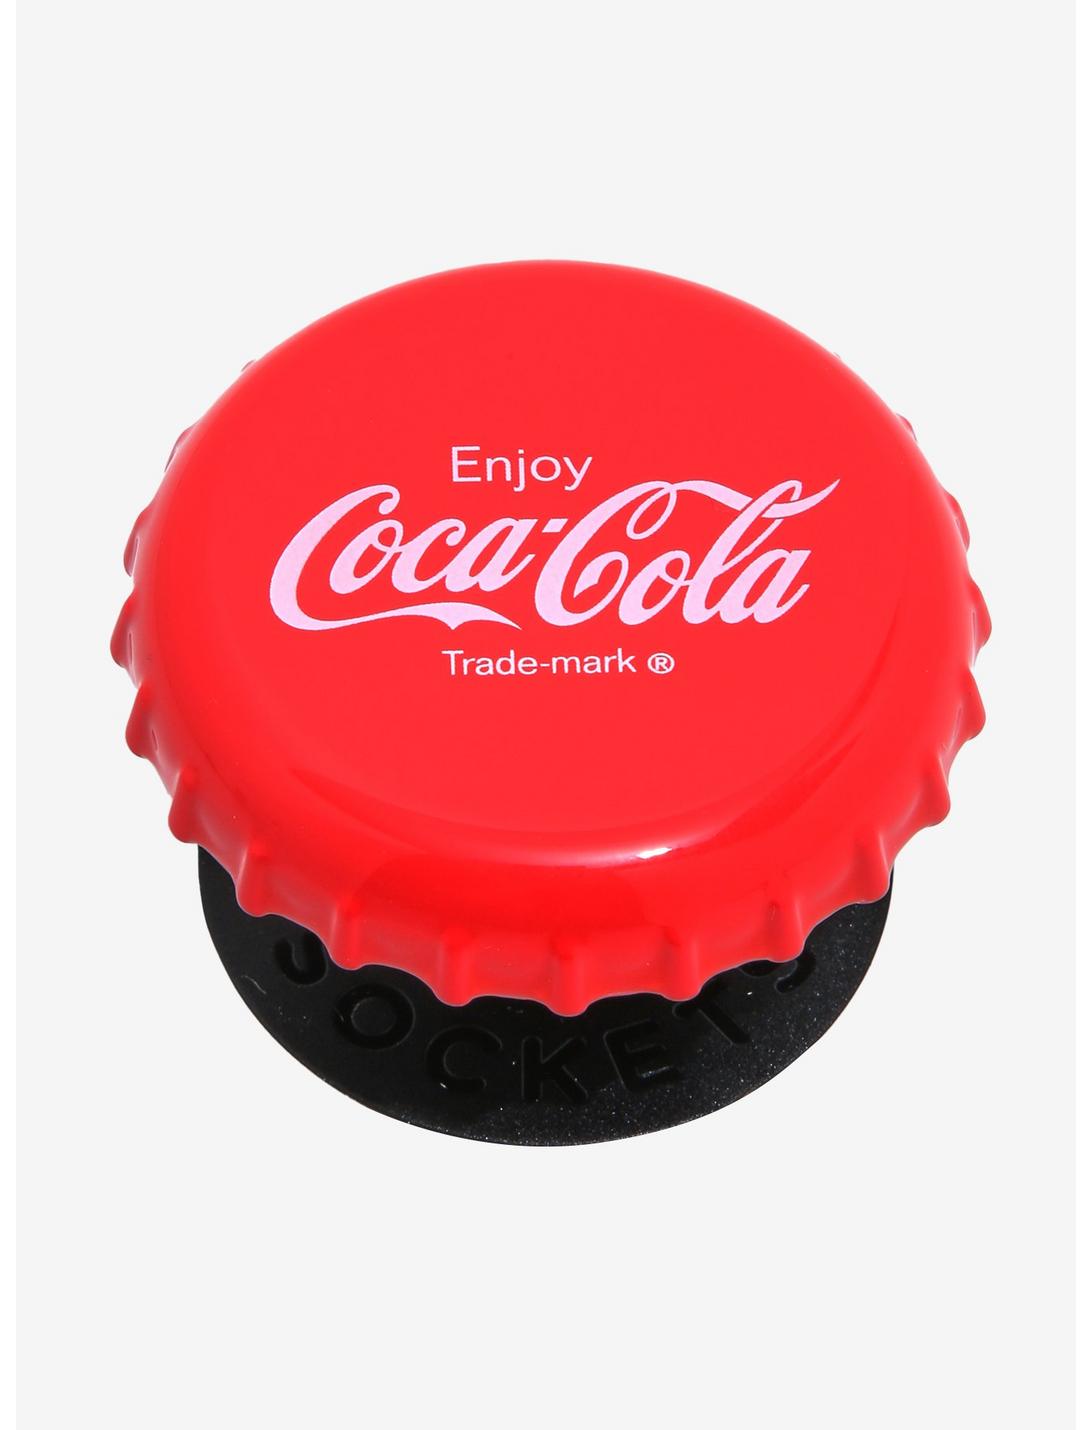 Coca-Cola Coke Bottle Cap Figural PopSocket, , hi-res